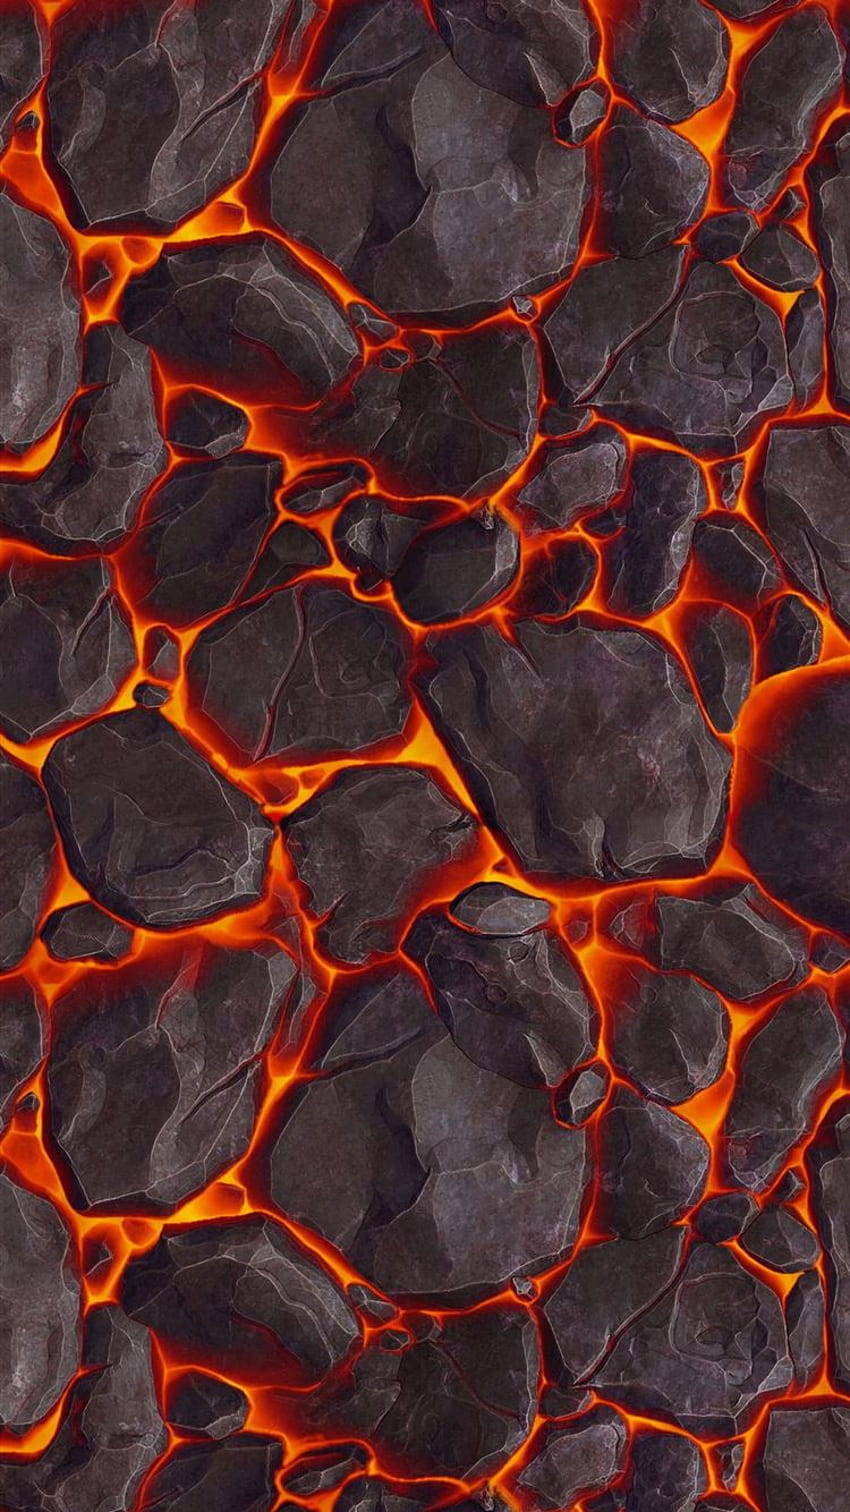 375301 Volcano Lava 4k - Rare Gallery HD Wallpapers